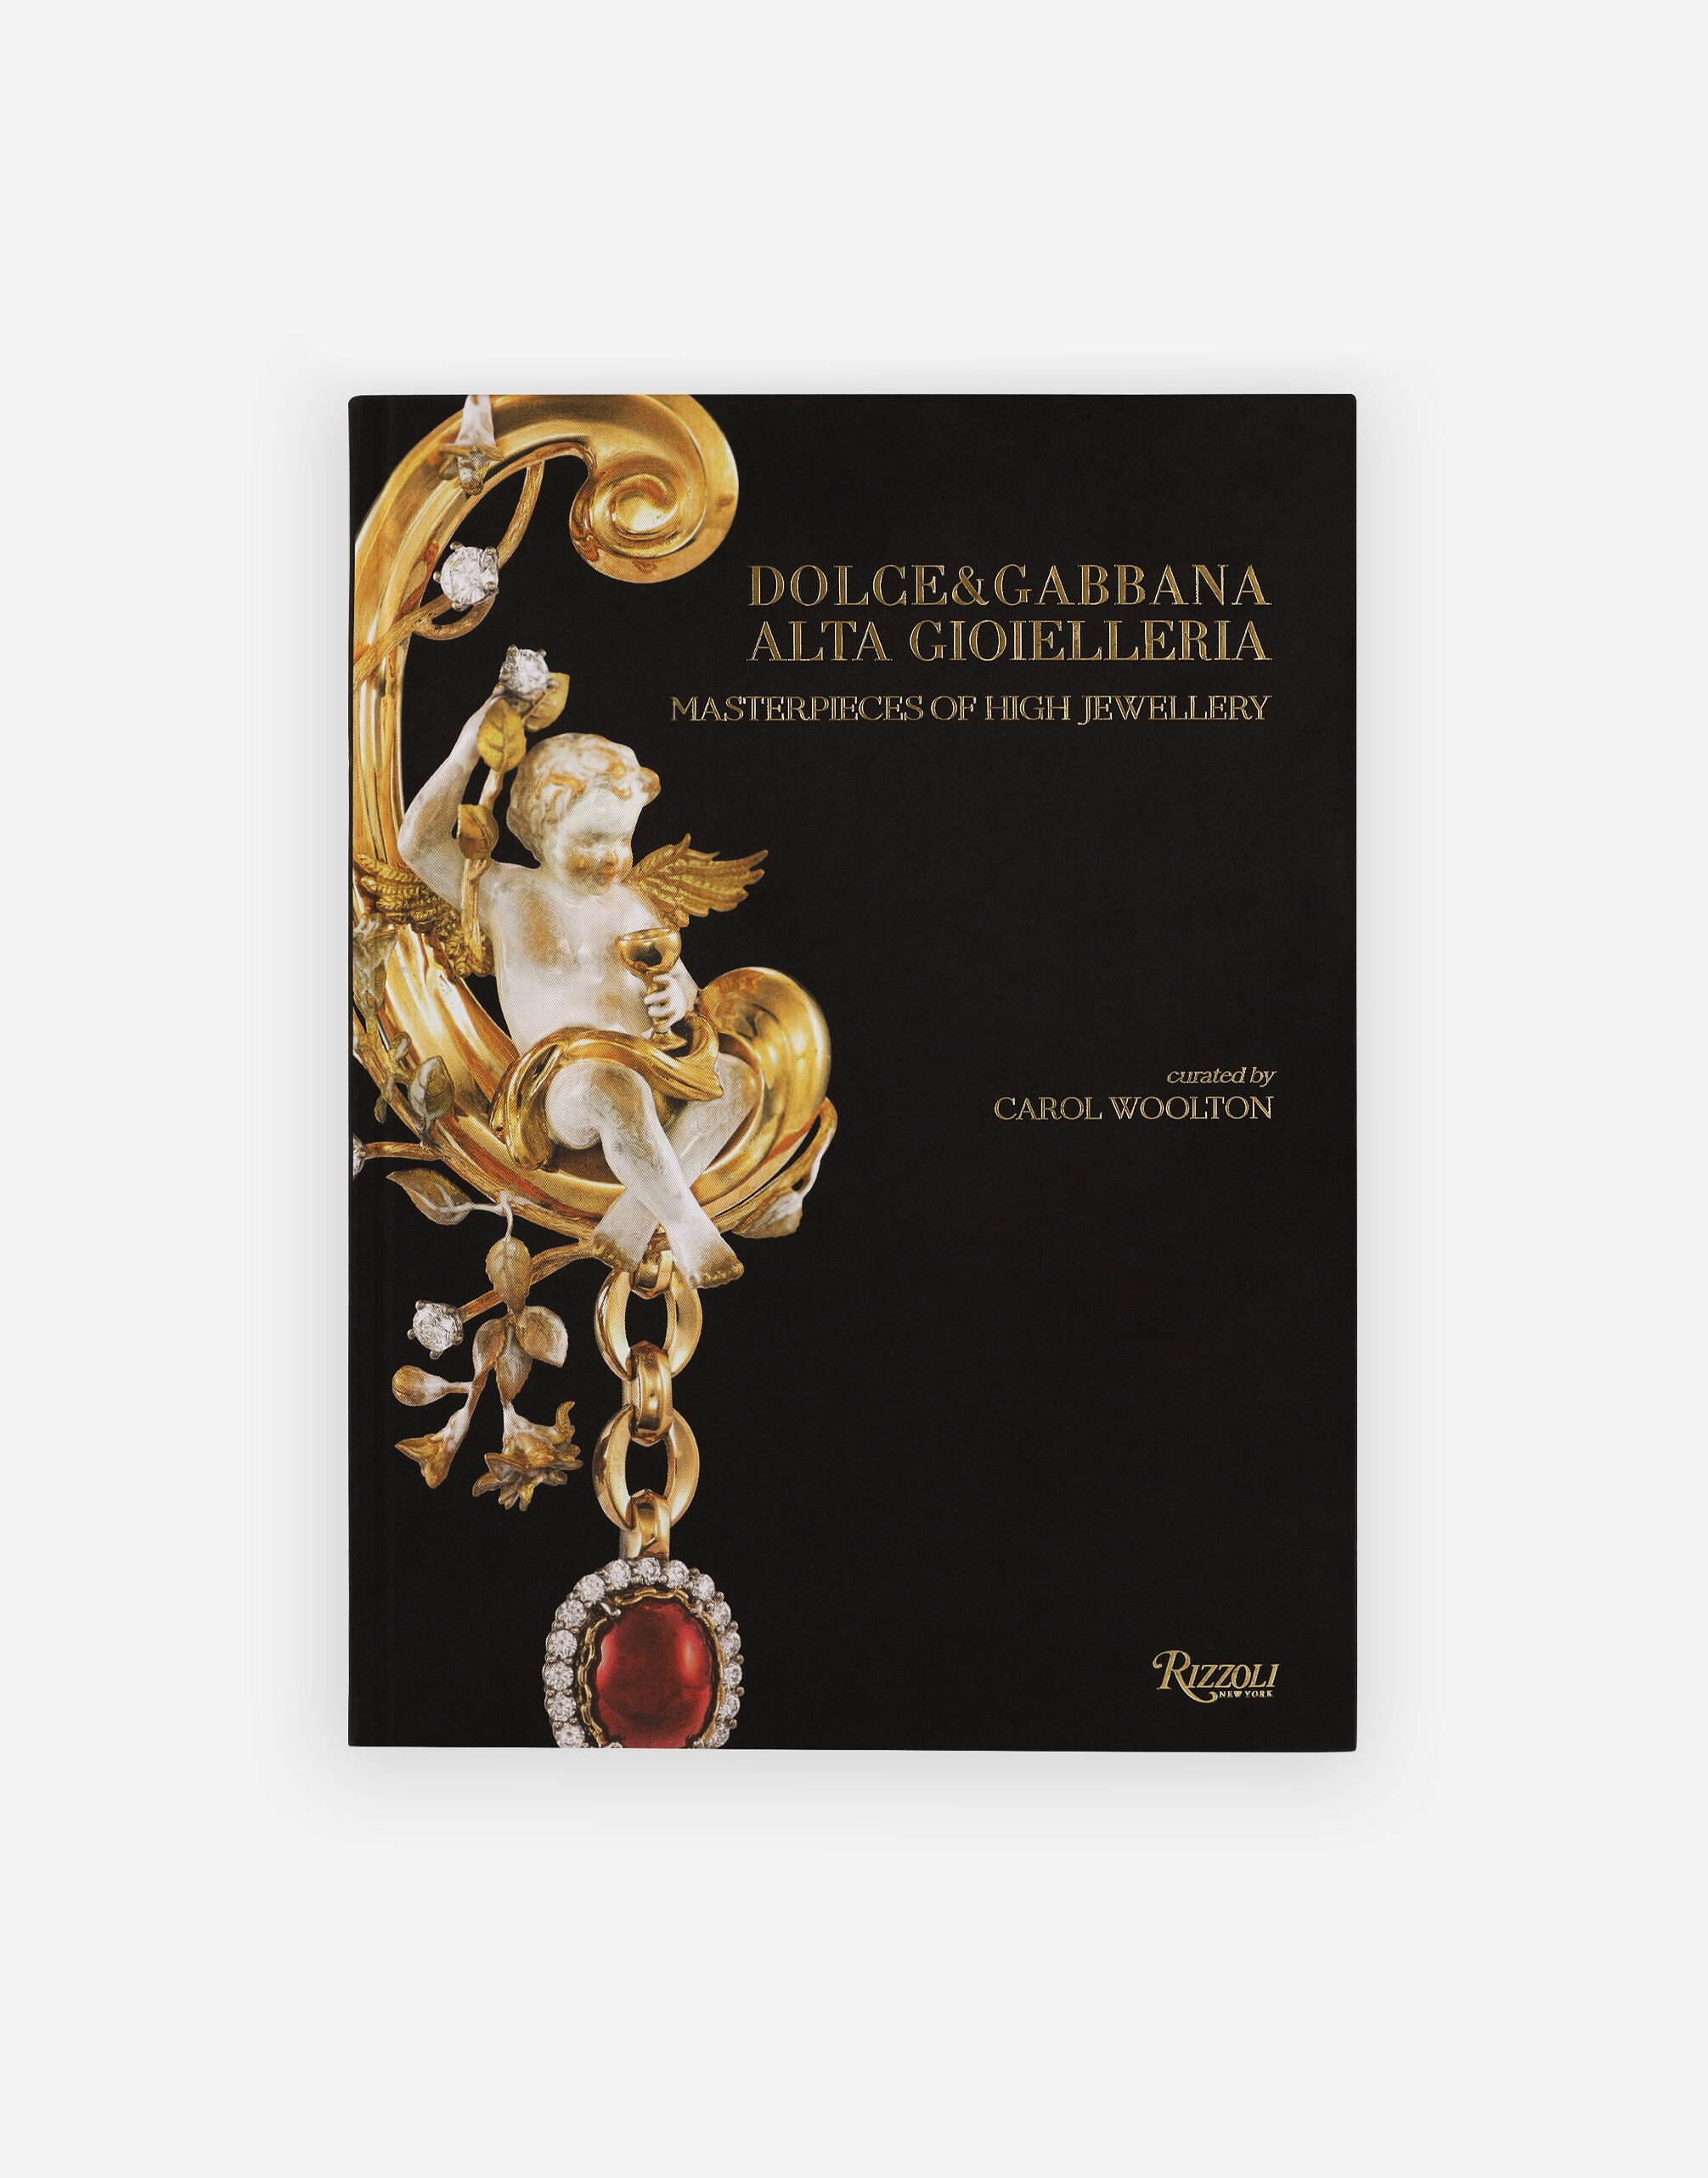 Dolce & Gabbana Dolce & Gabbana Alta Gioielleria: Masterpieces of High Jewellery Multicolor VL1137VLTW1